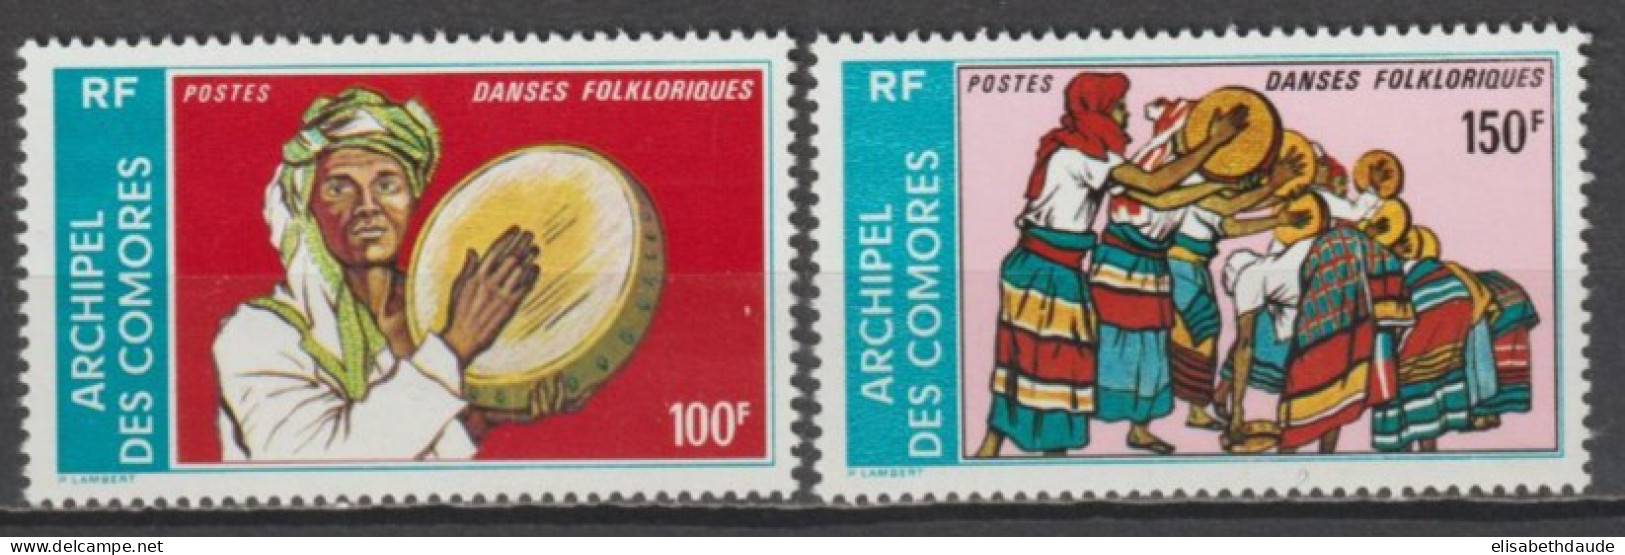 COMORES - 1975 - RARE ! DERNIERE SERIE EMISE  - YVERT 104A/B ** MNH  - COTE = 300 EUR. PRIX DISCOUNT ! - Ungebraucht